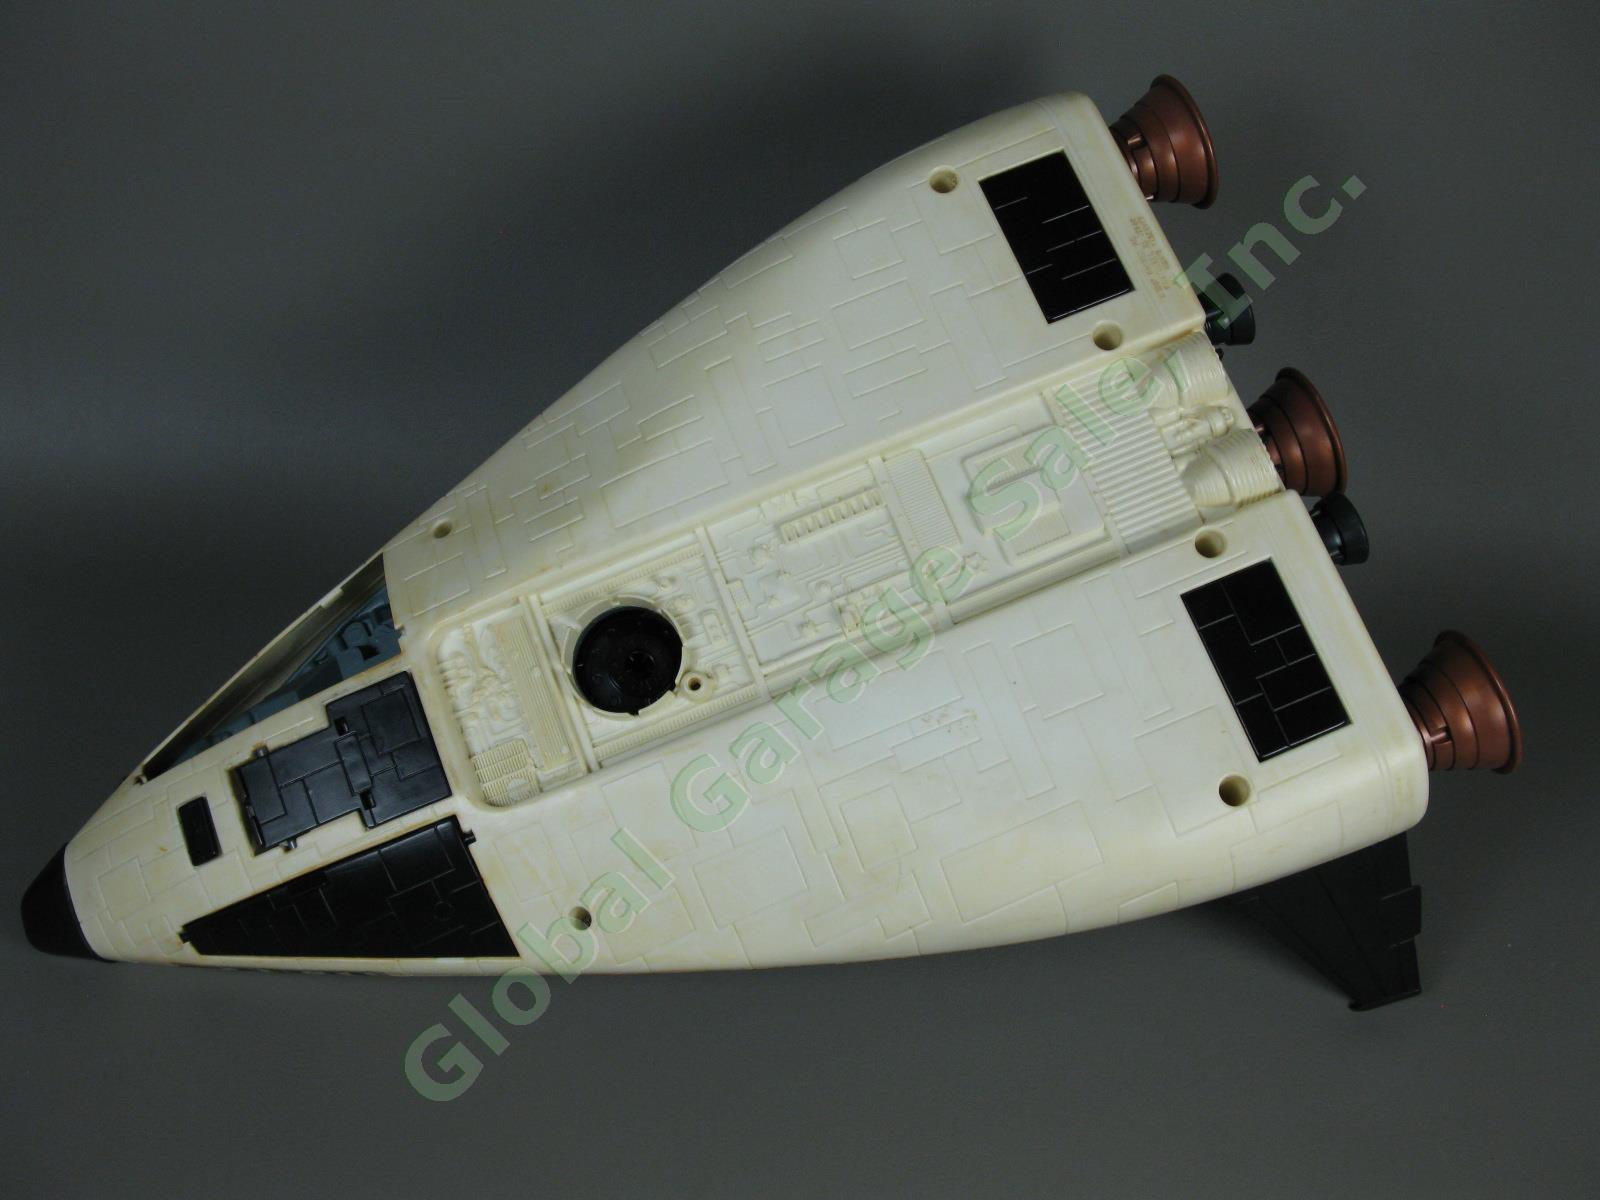 Original 1989 GI Joe Army Crusader Space Shuttle Payload Avenger Scout Craft NR 11